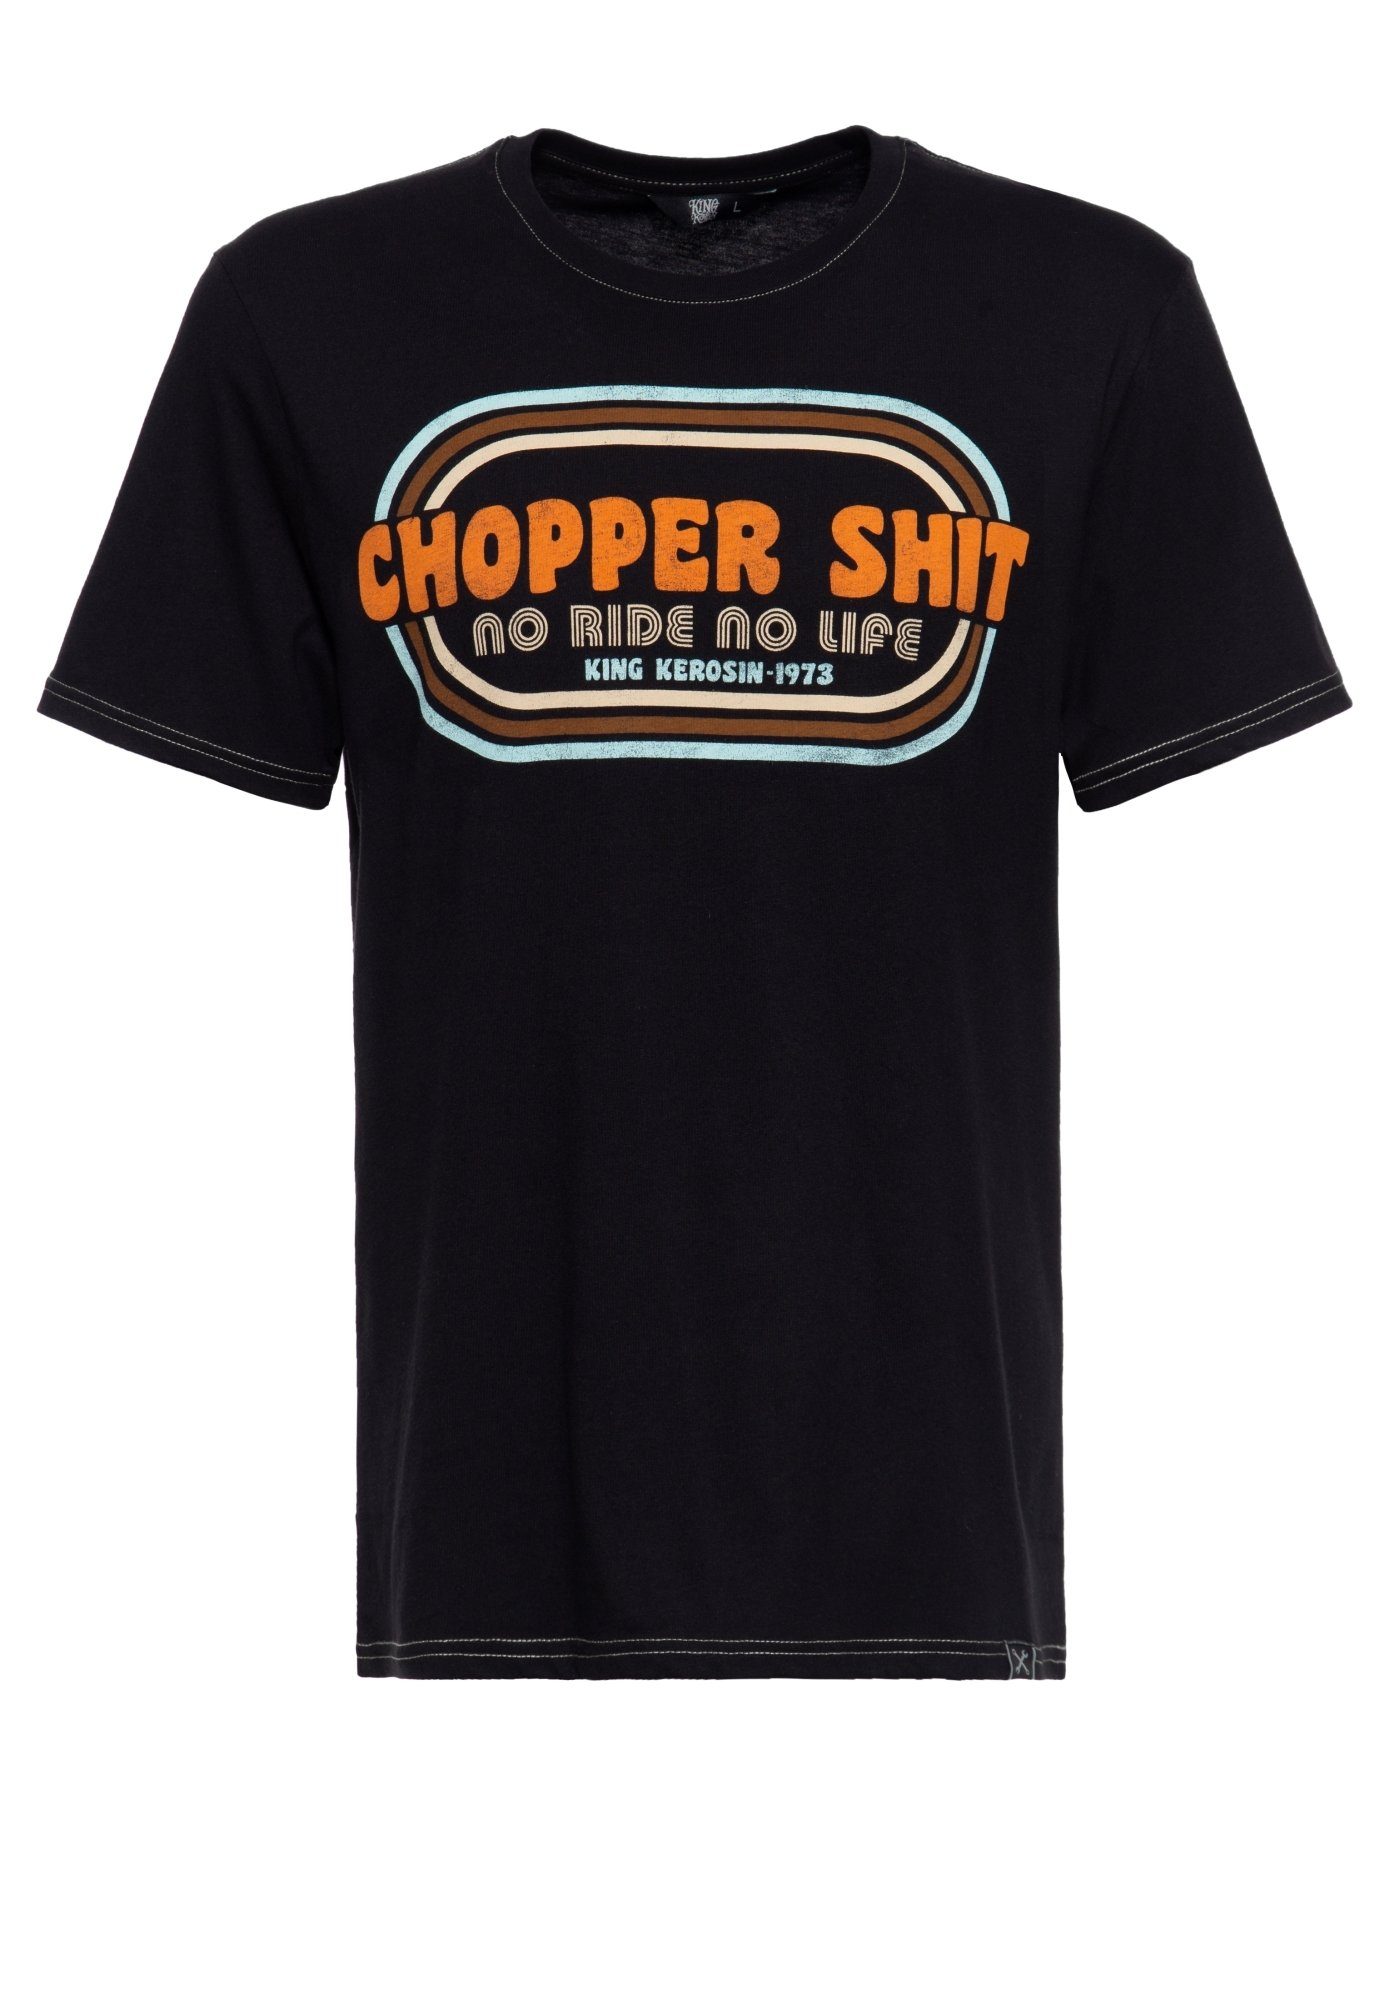 Absteppungen T-Shirt KingKerosin Print Chopper mit und Sh*t farbigen